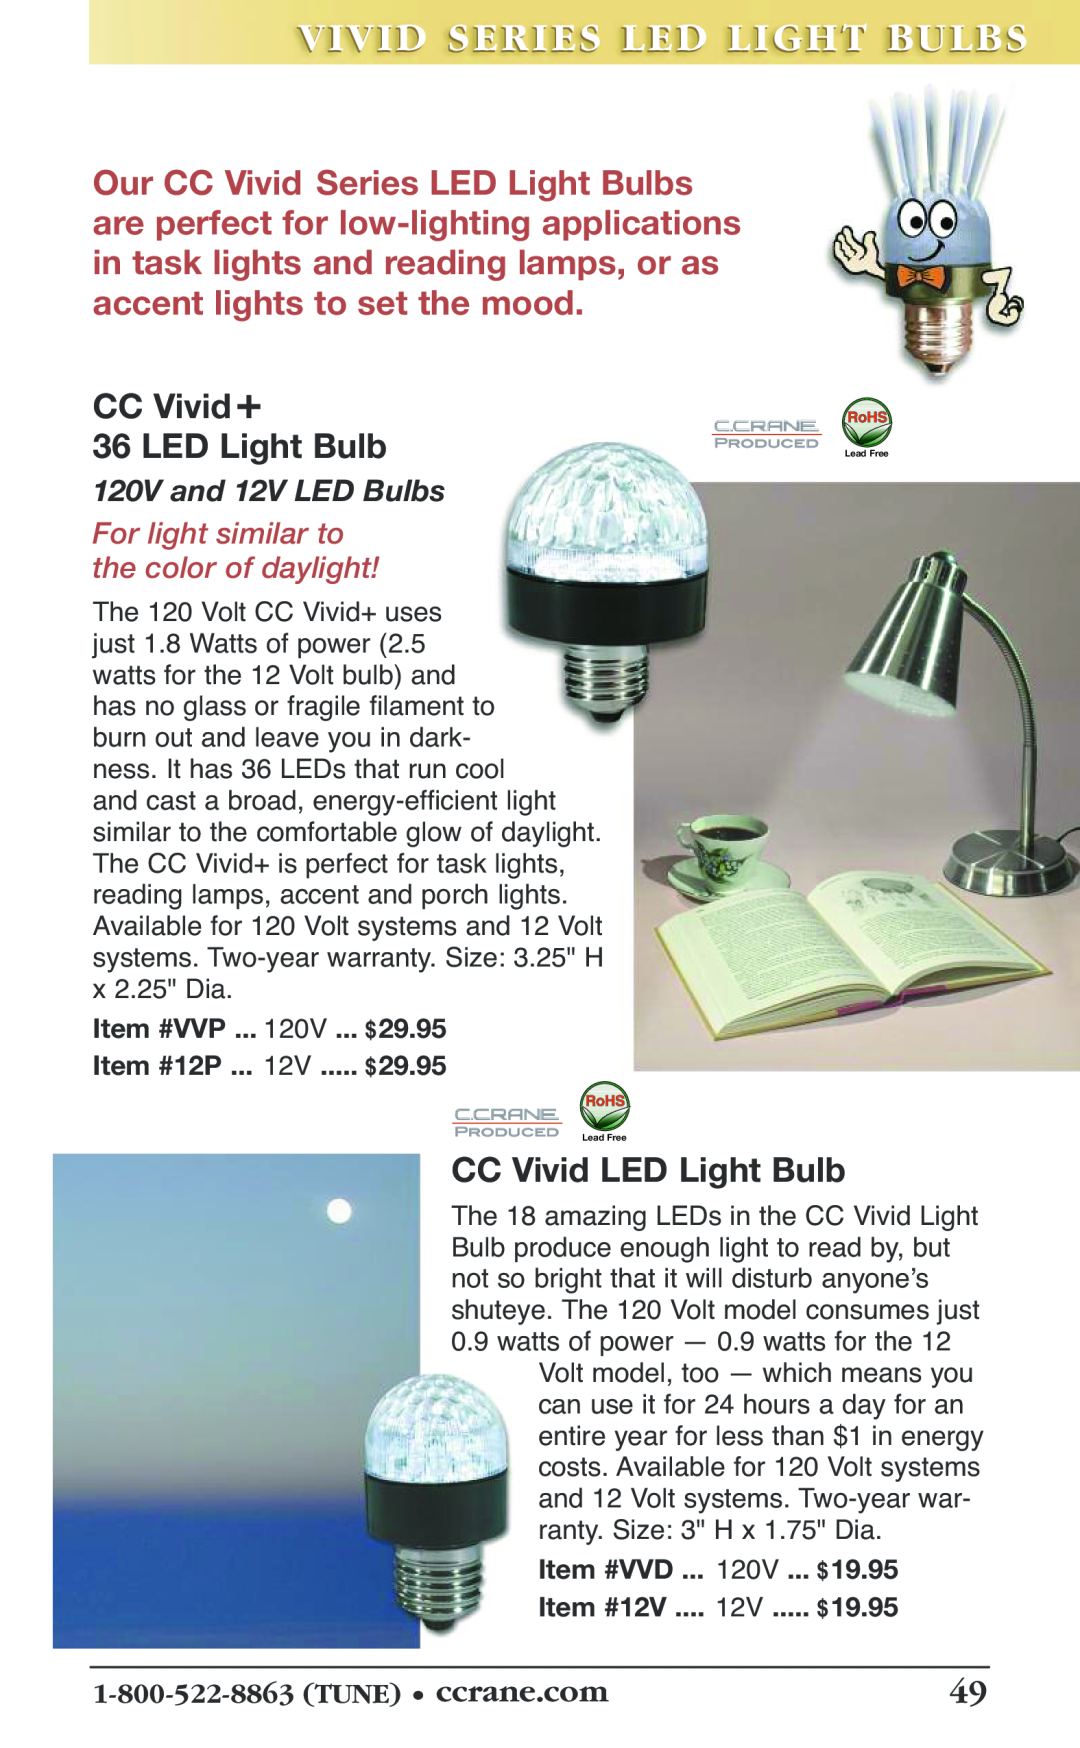 C. Crane 19f Viv Id Seriesies Led Light Bulbs, CC Vivid+, CC Vivid LED Light Bulb, 120V and 12V LED Bulbs, Item #12P 